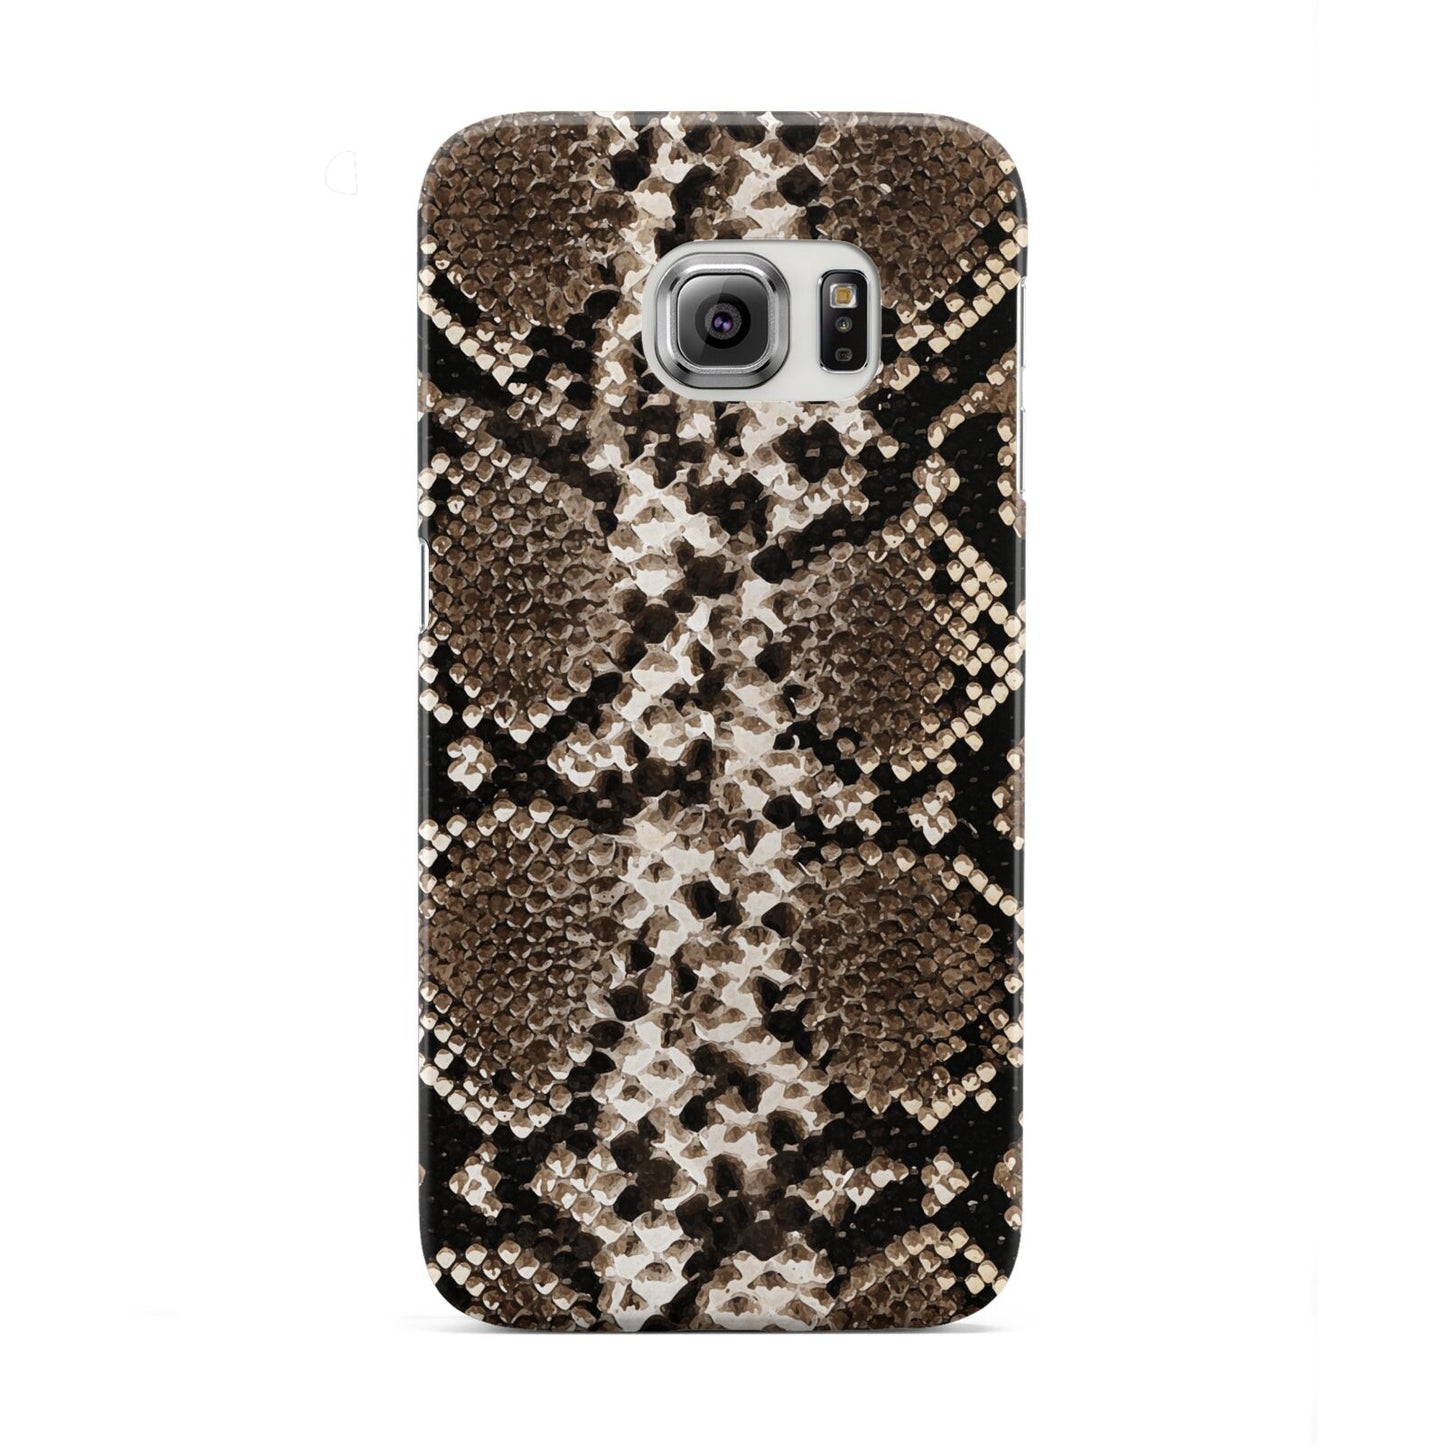 Snakeskin Pattern Samsung Galaxy S6 Edge Case